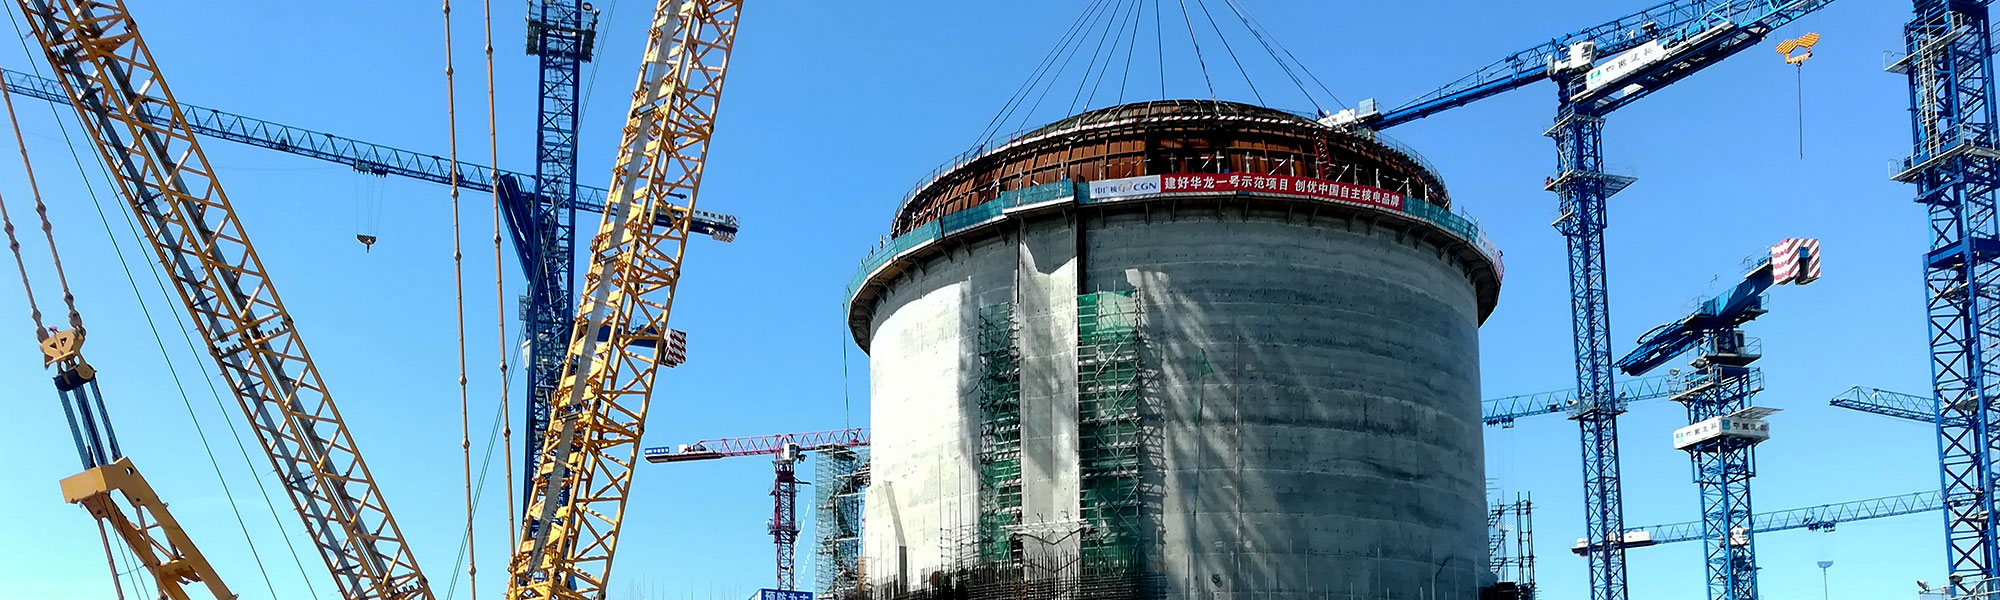 Fangchenggang Nuclear Power Plant 3&4, China